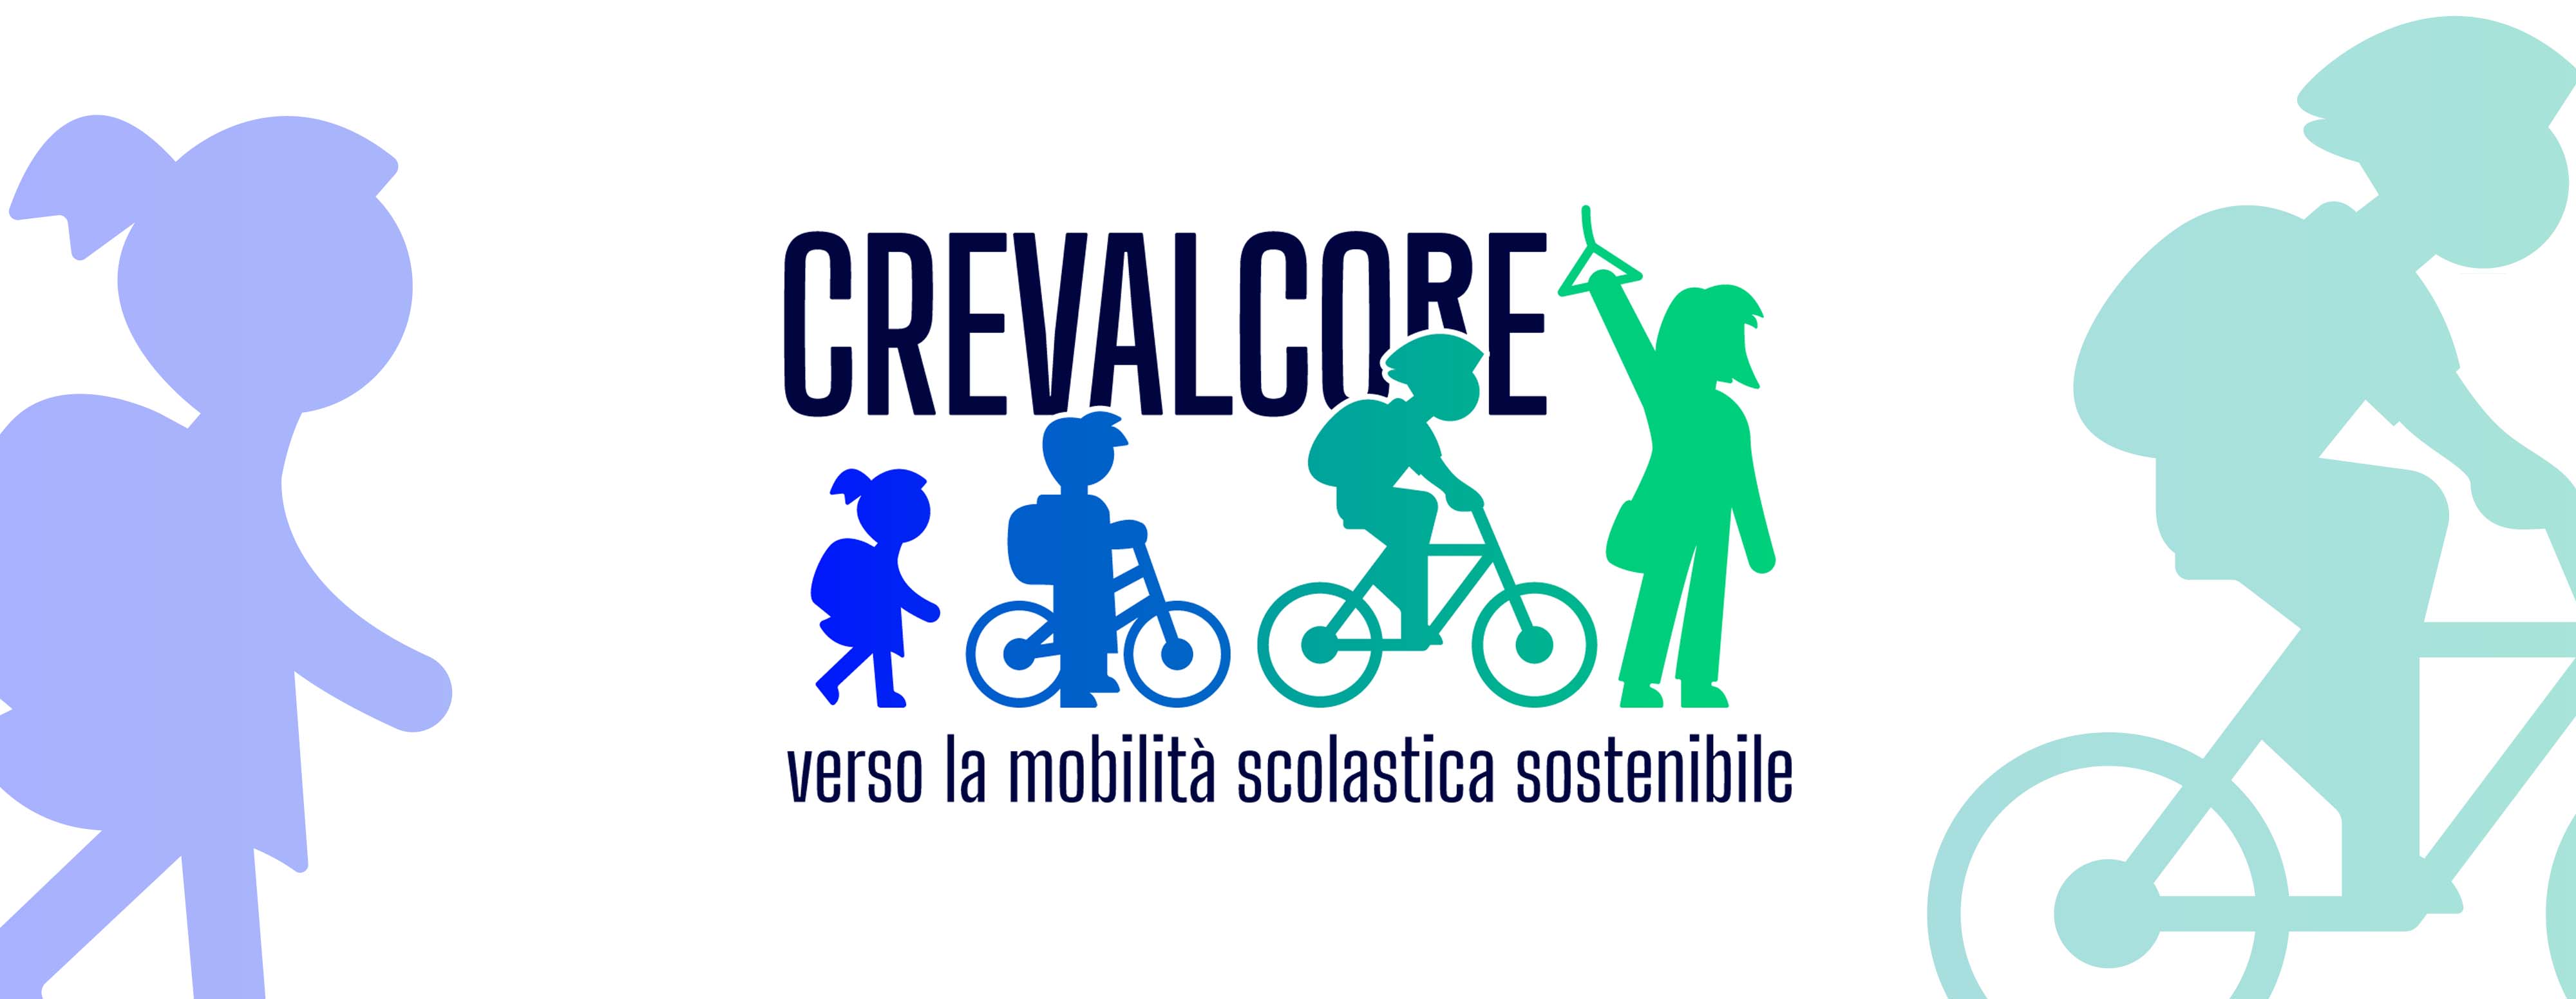 Crevalcore logo.jpg